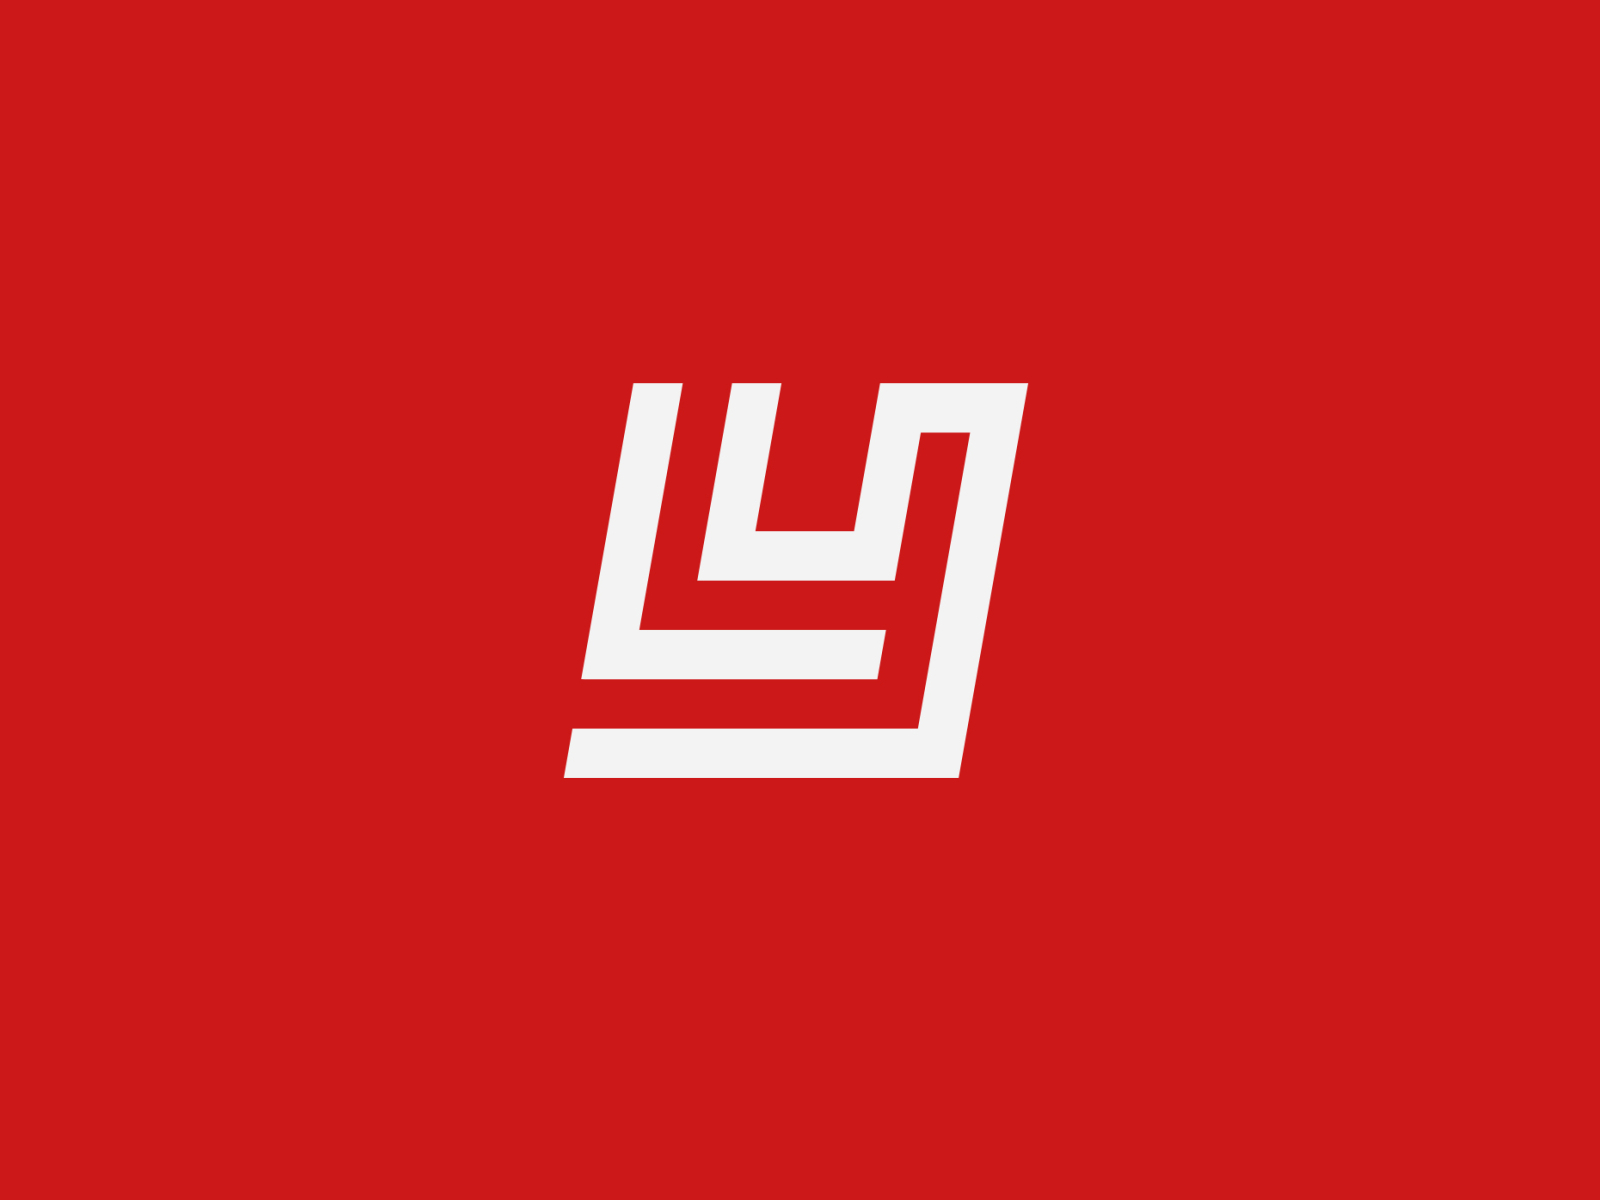 LY Logo by Daud Hasan on Dribbble